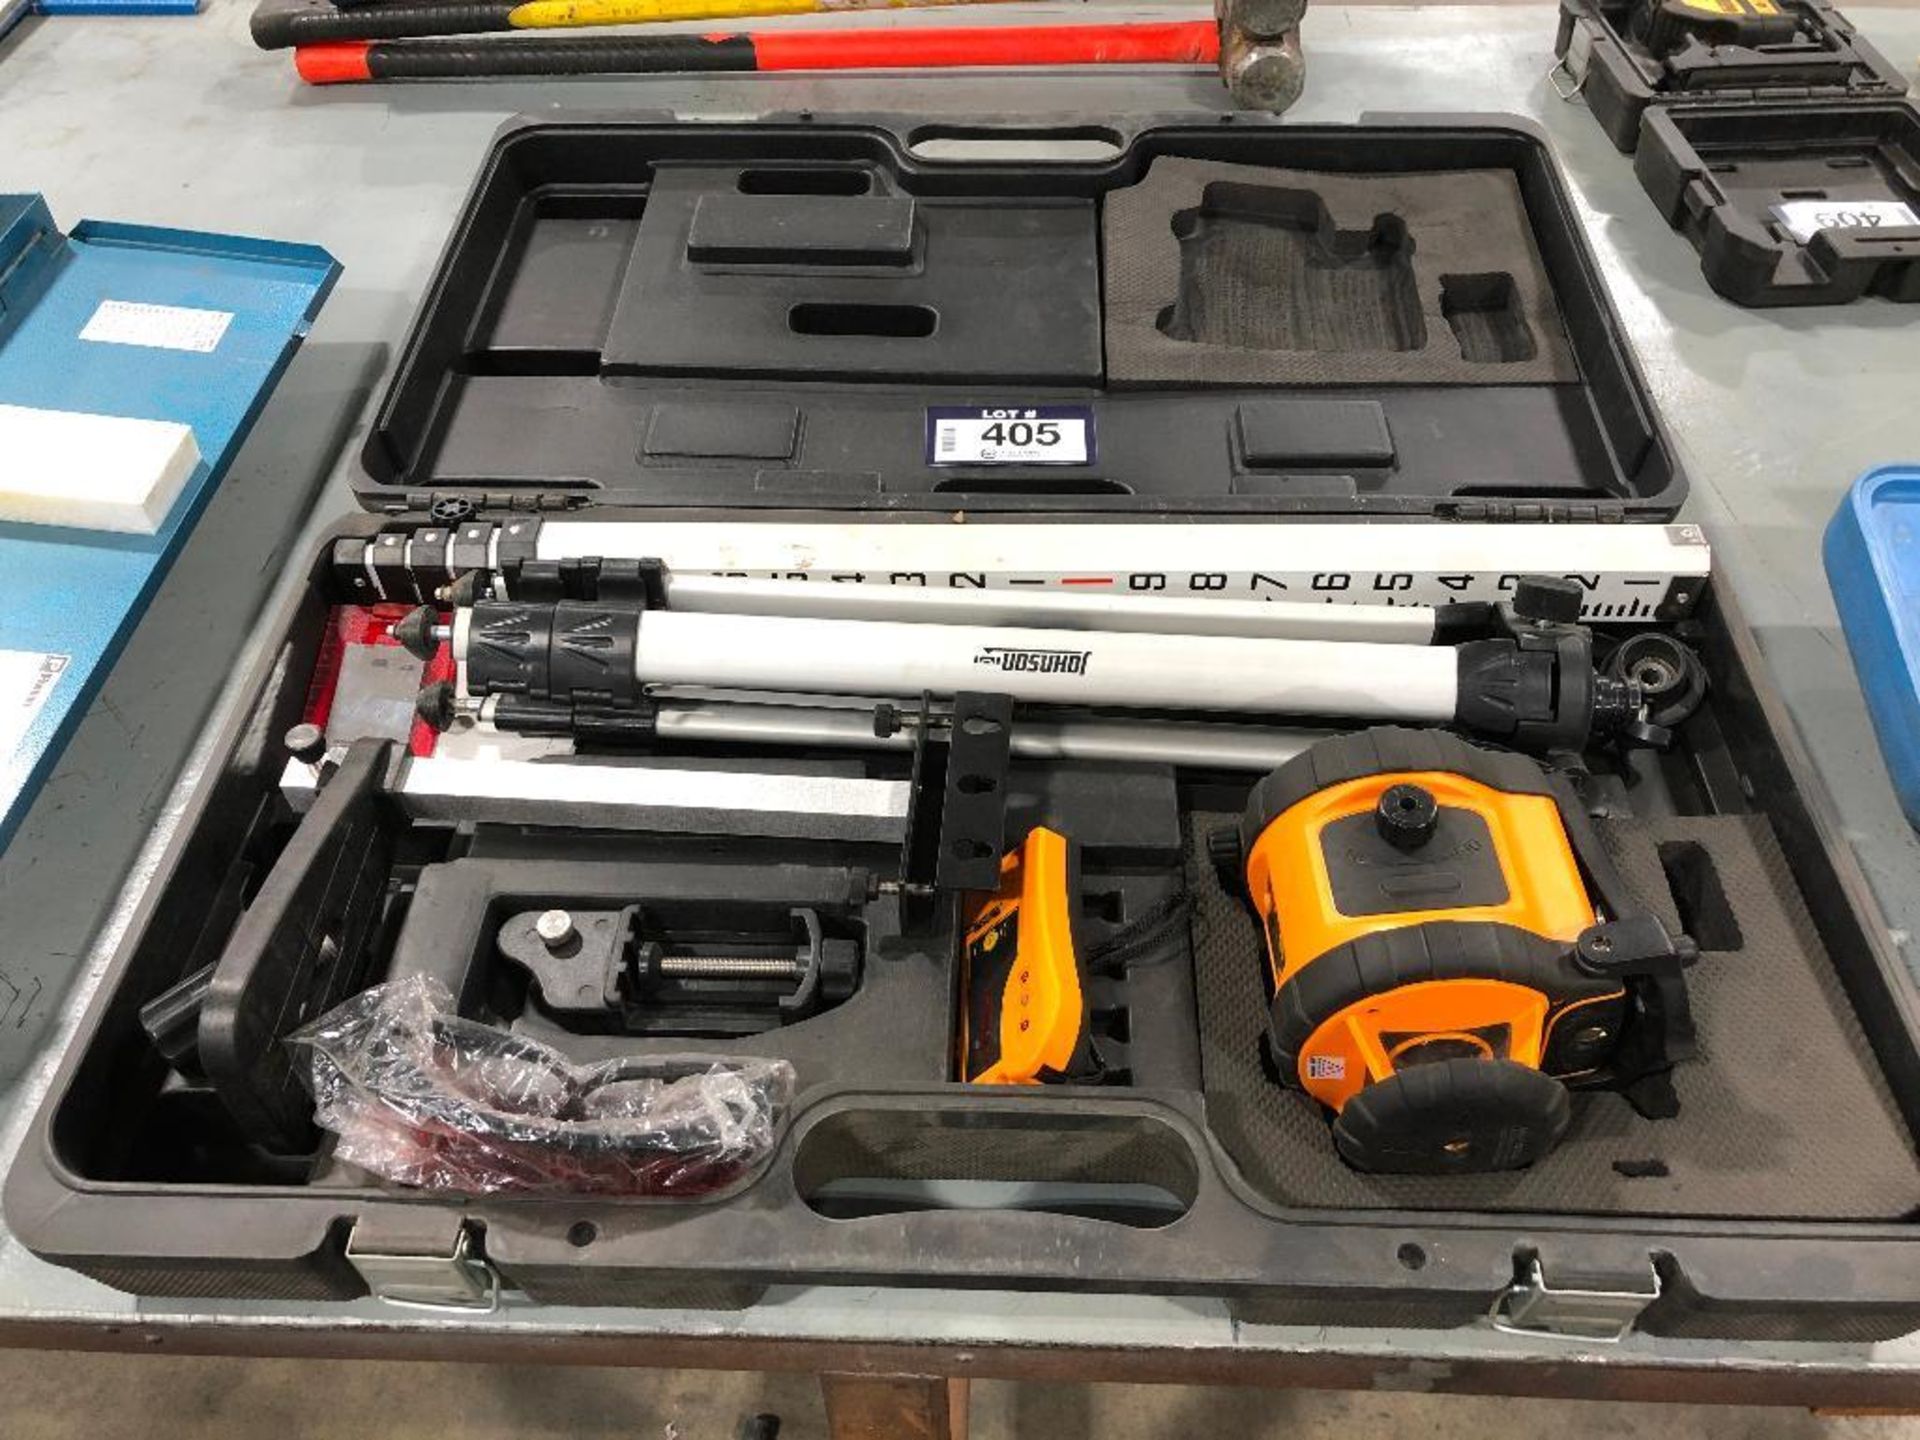 Johnson Surveying Kit w/ Tripod, Measuring Stick, Lasers, etc.